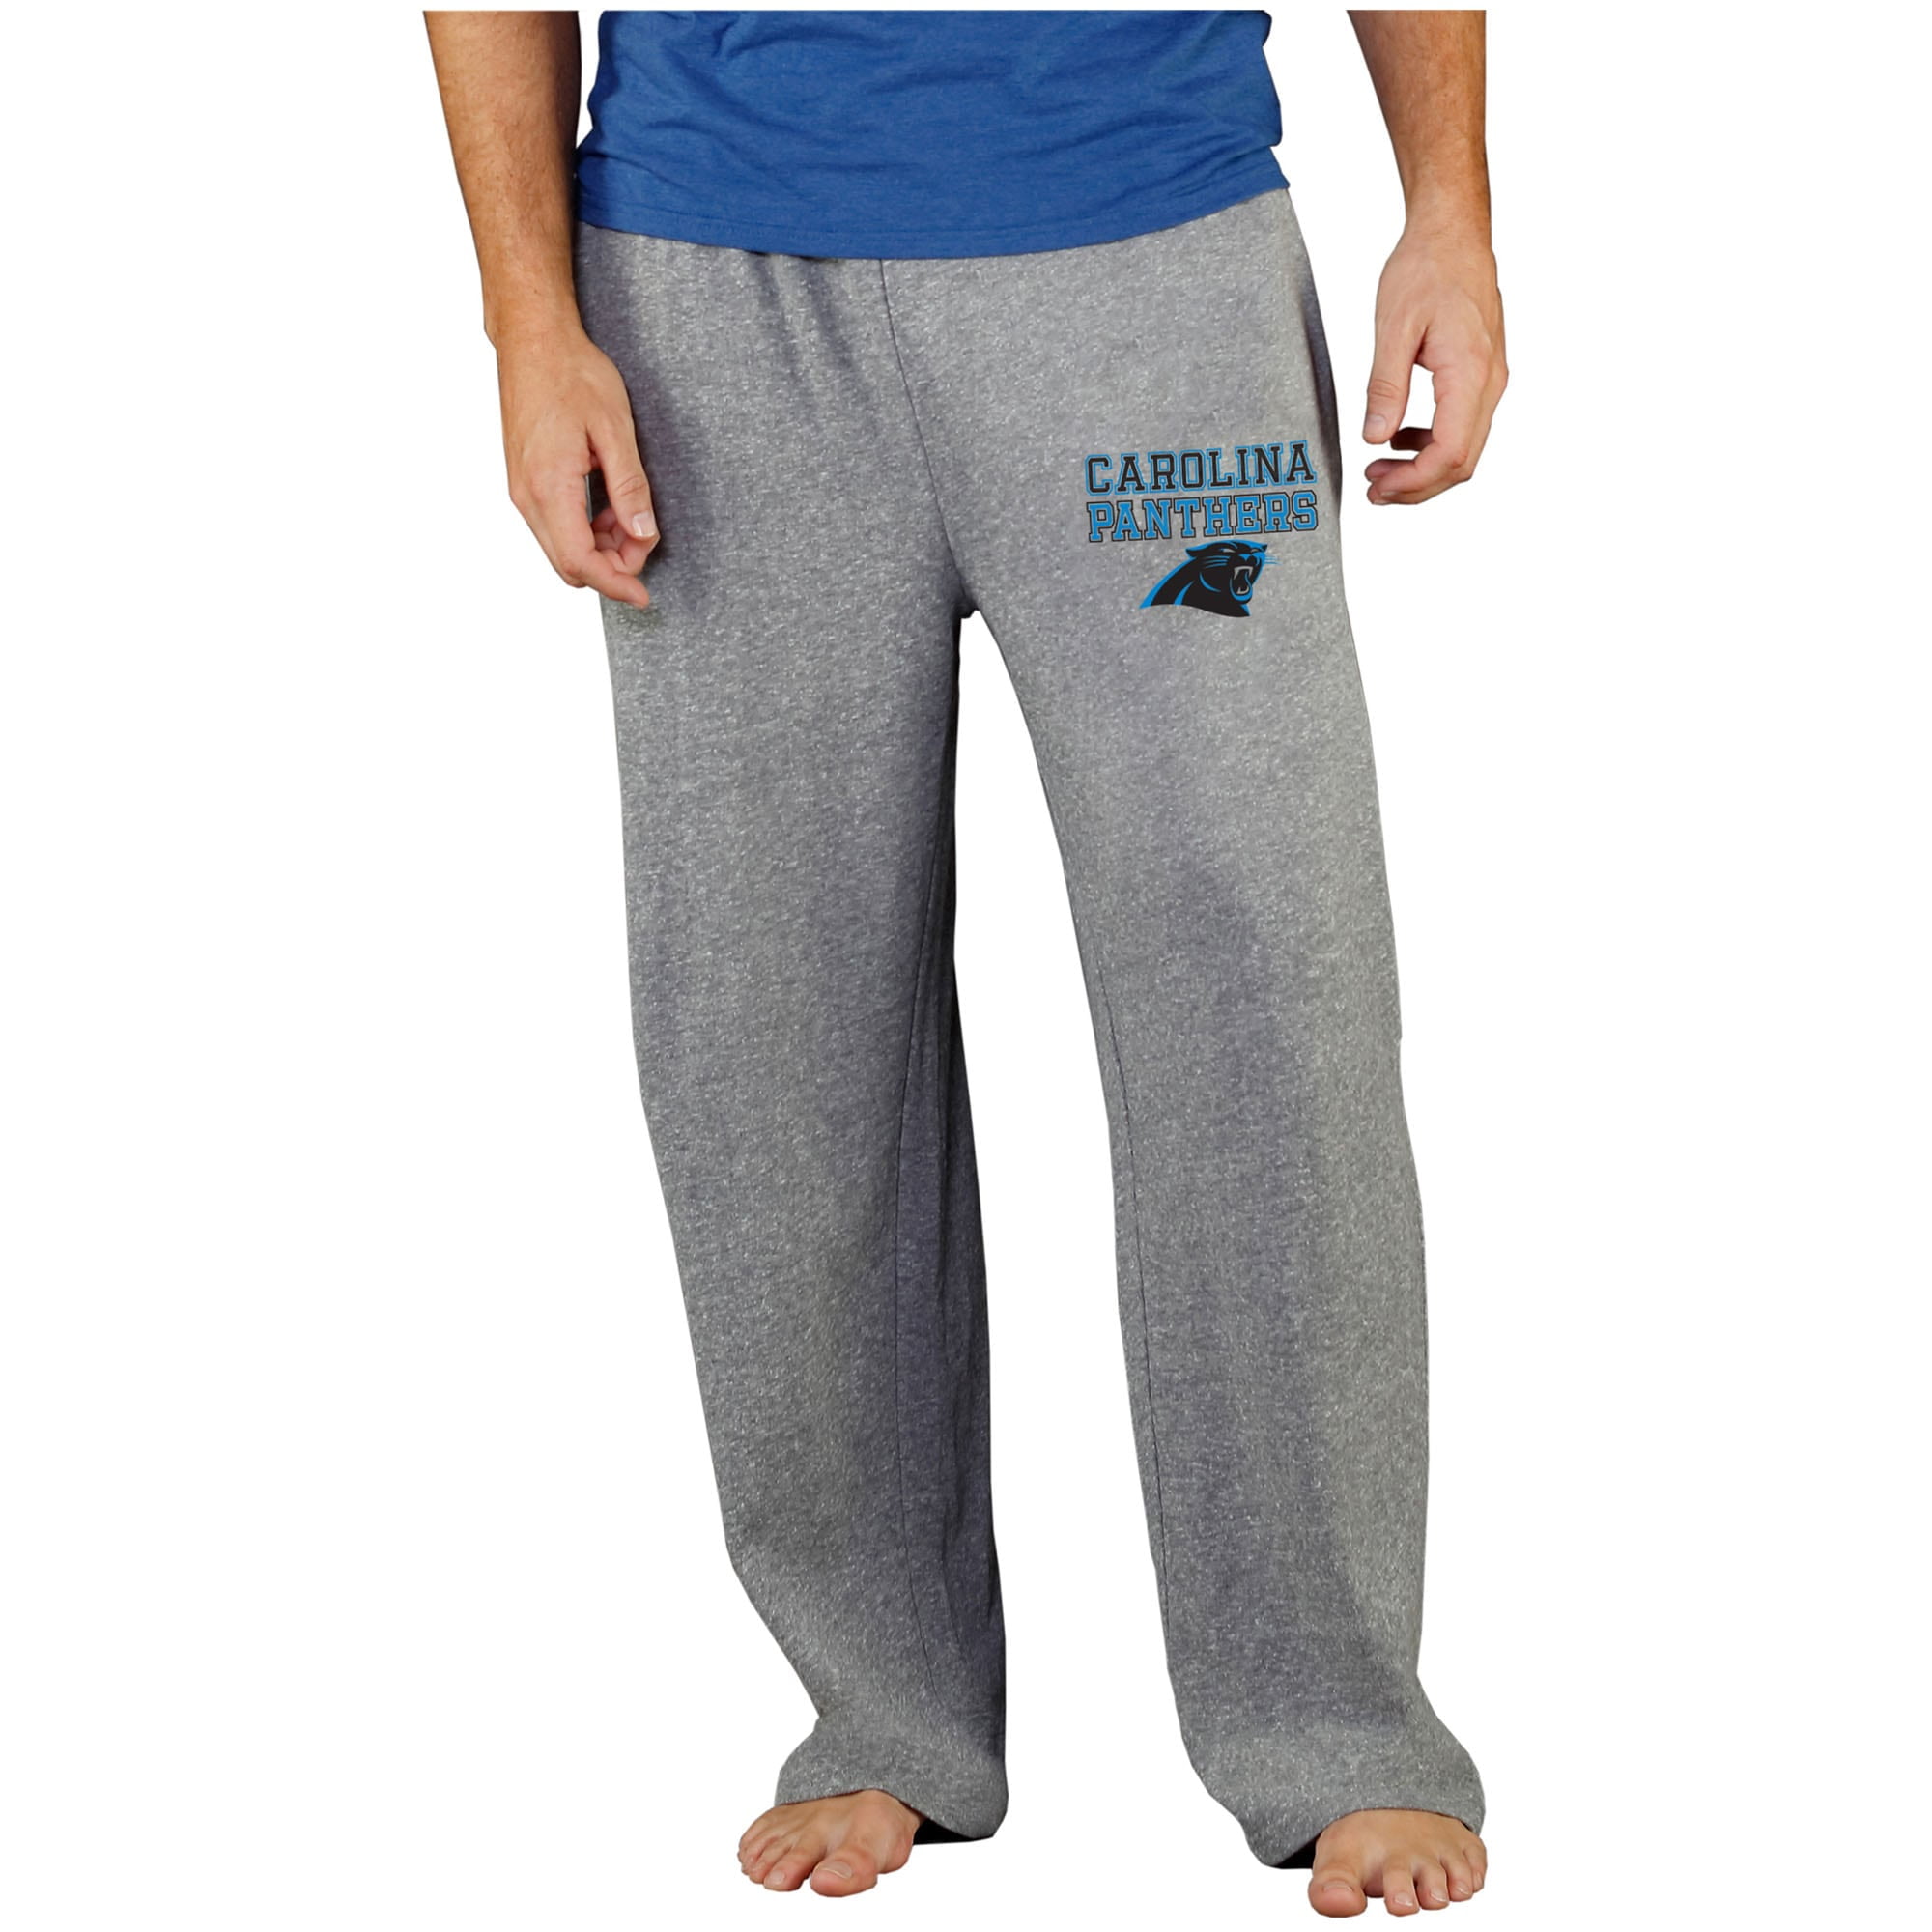 Carolina Panthers Concepts Sport Mainstream Pants - Gray - Walmart.com ...